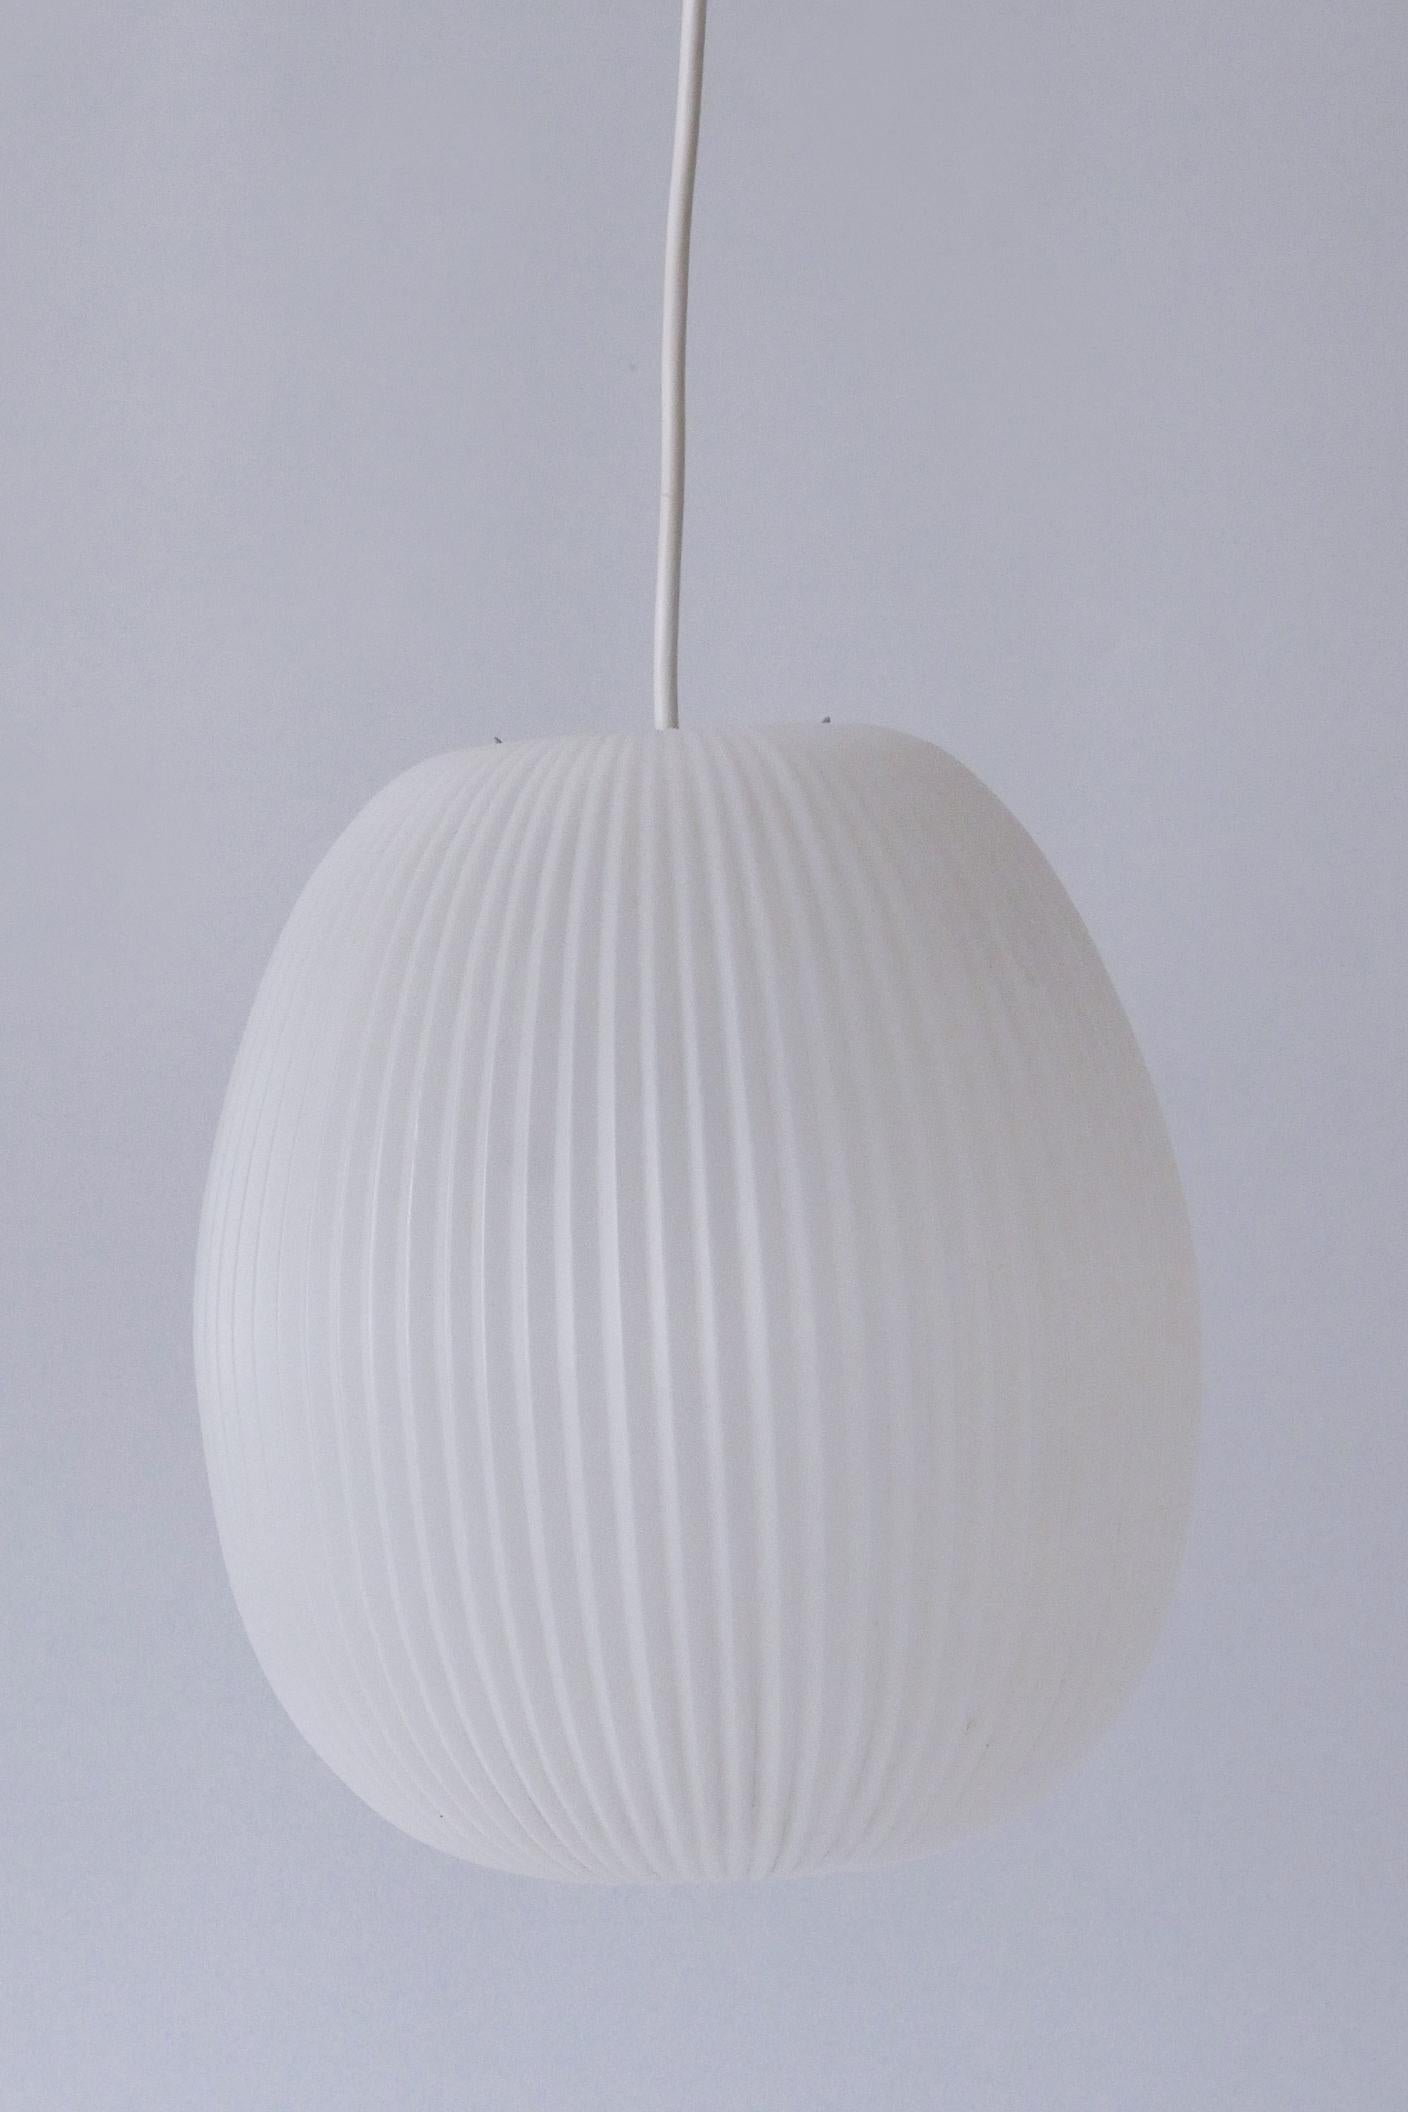 Lovely Mid-Century Modern Pendant Lamp by Aloys F. Gangkofner für Erco 1960s For Sale 2